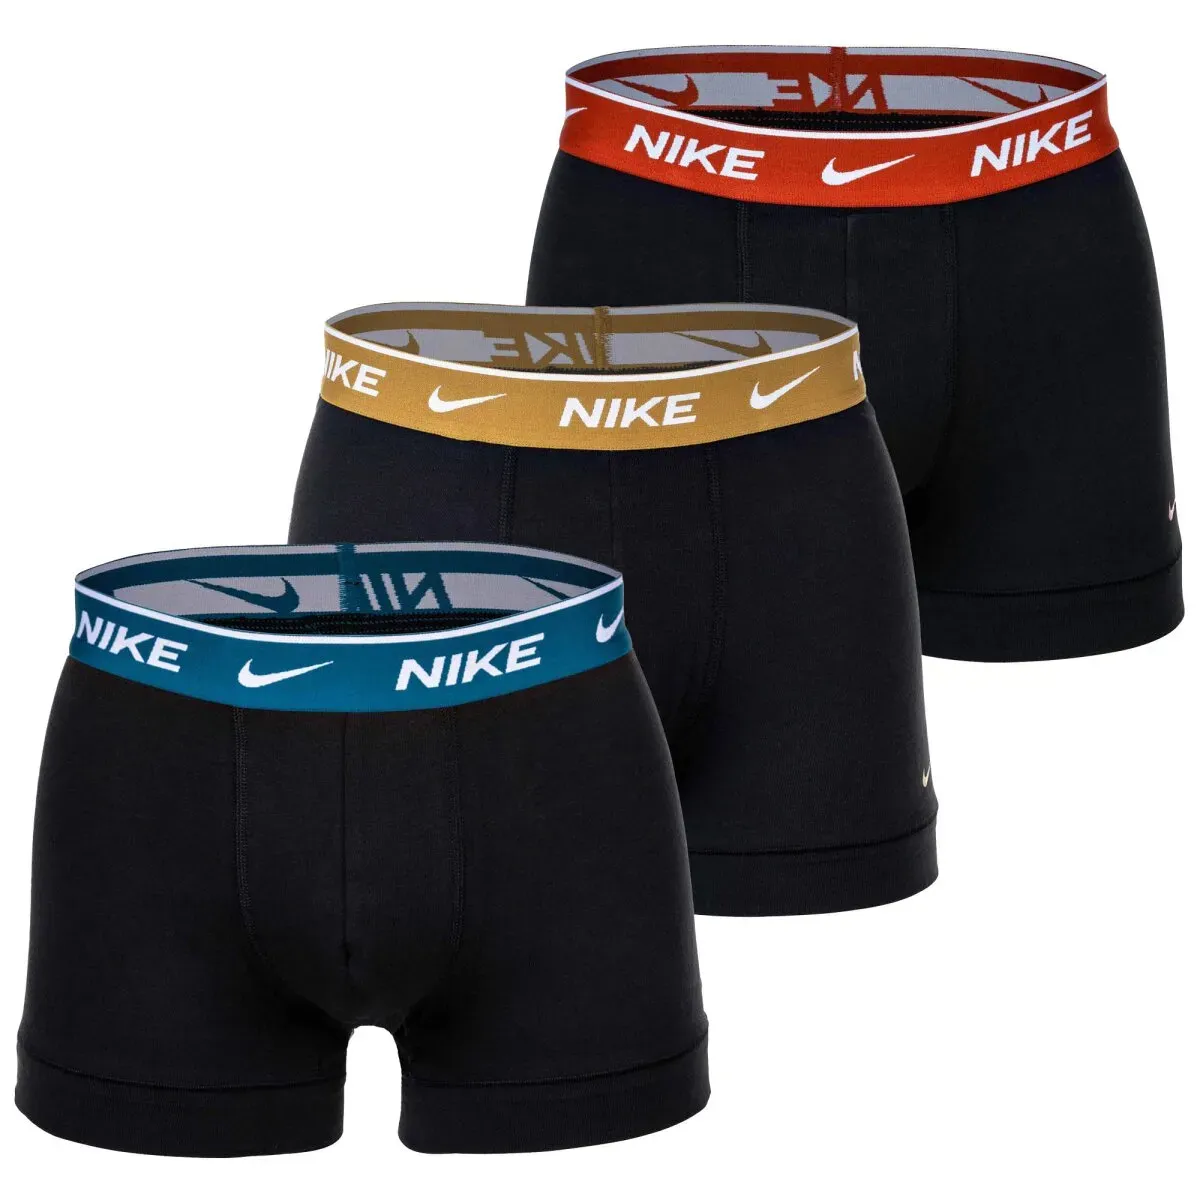 NIKE Herren Boxer Shorts, 3er Pack - Trunks, Logobund, Cotton Stretch Schwarz/Rot/Grau/Blau M